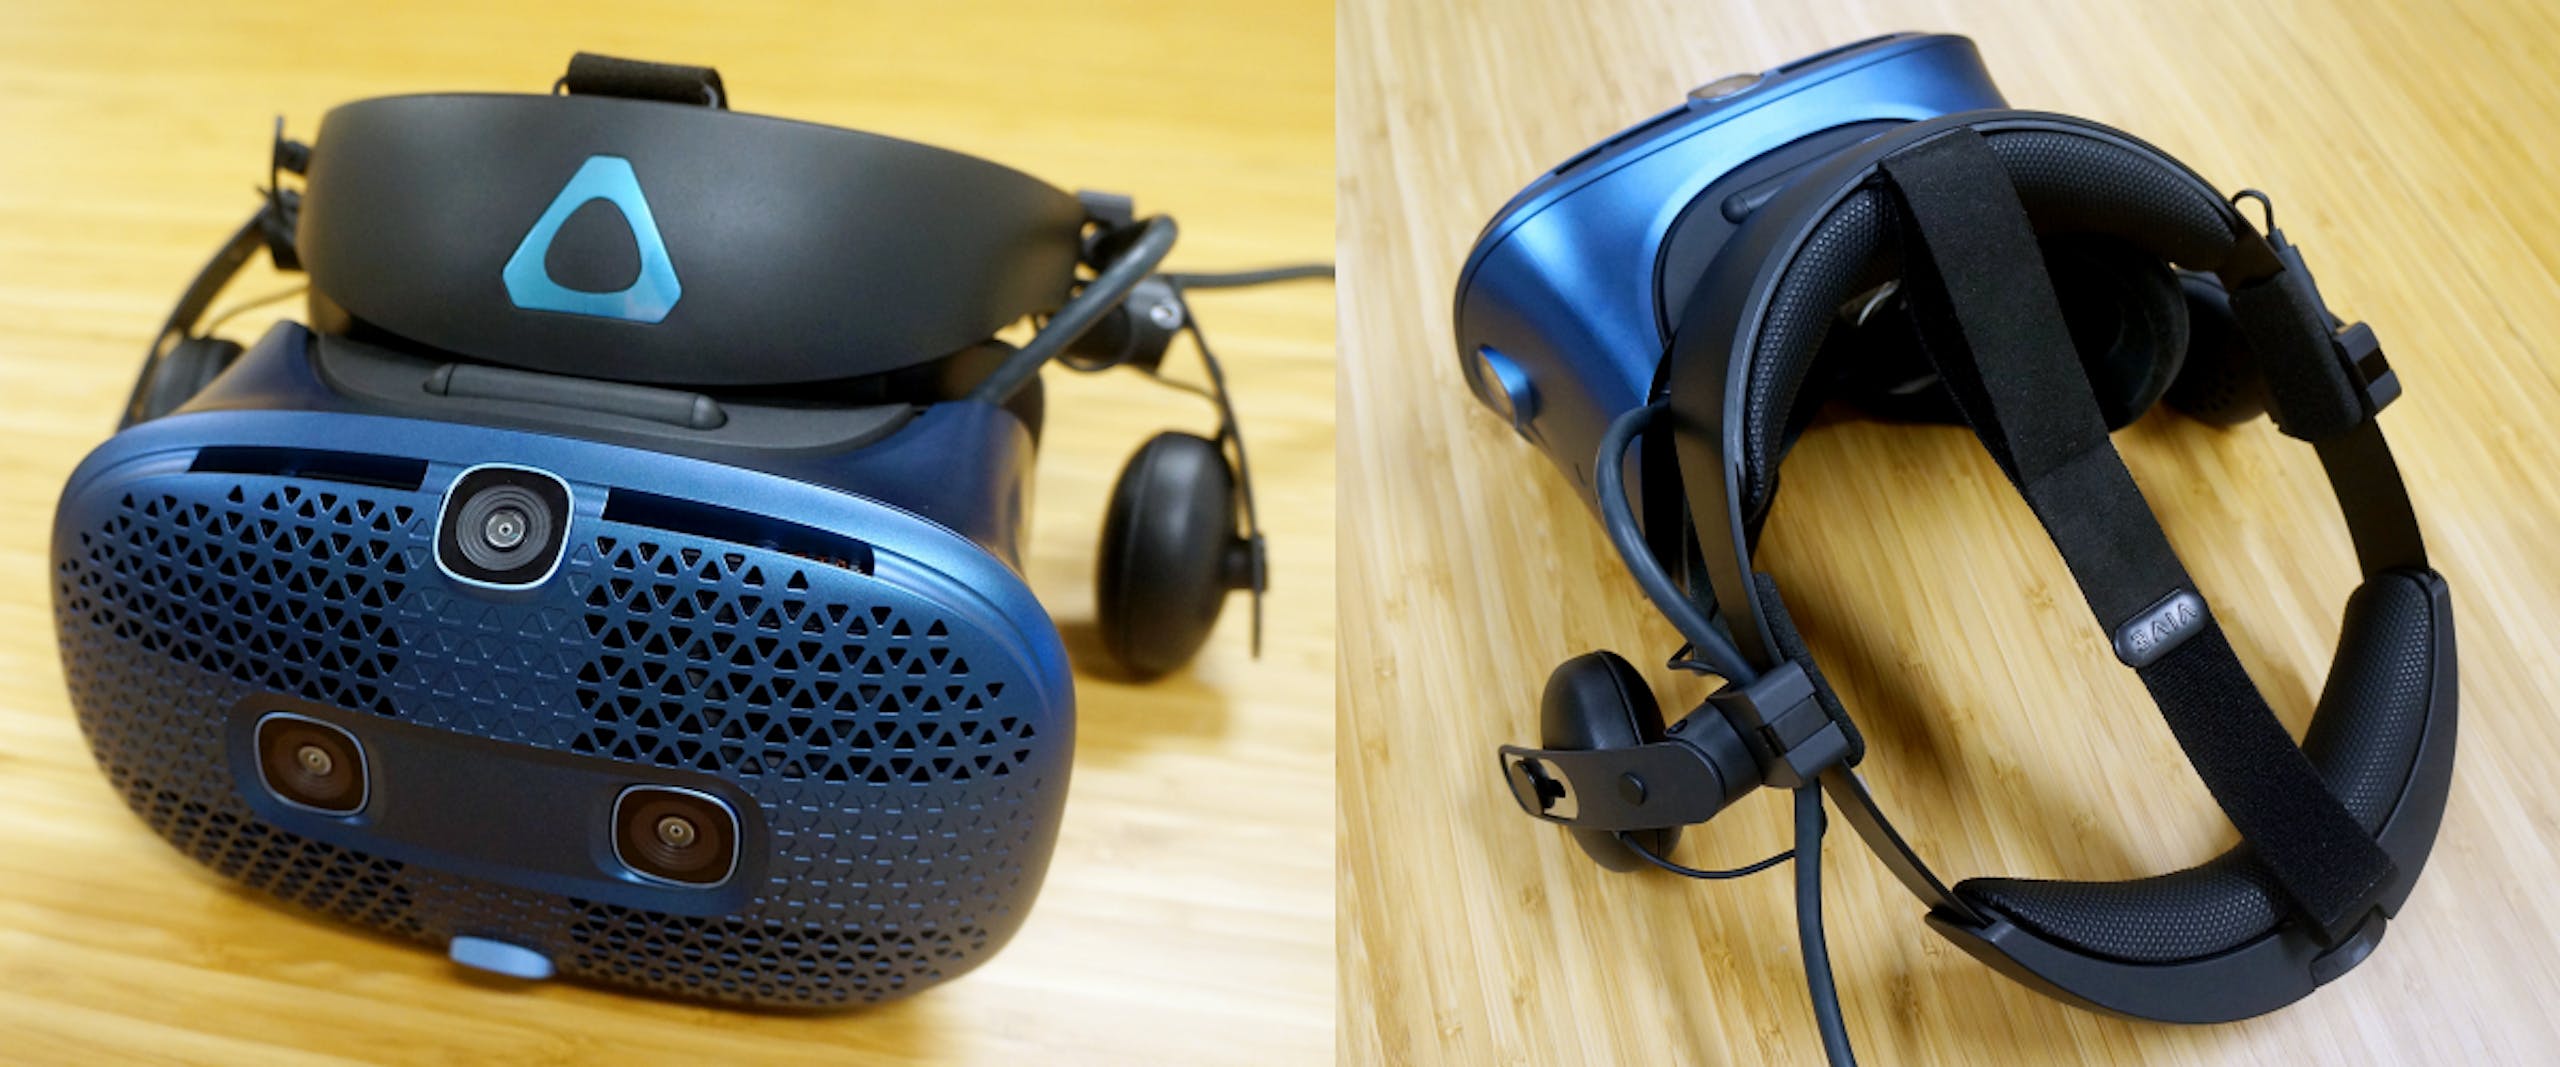 HTC VIVE Cosmos 全新VR 穿戴裝置，創造100% 沉浸體驗－搶先體驗試用